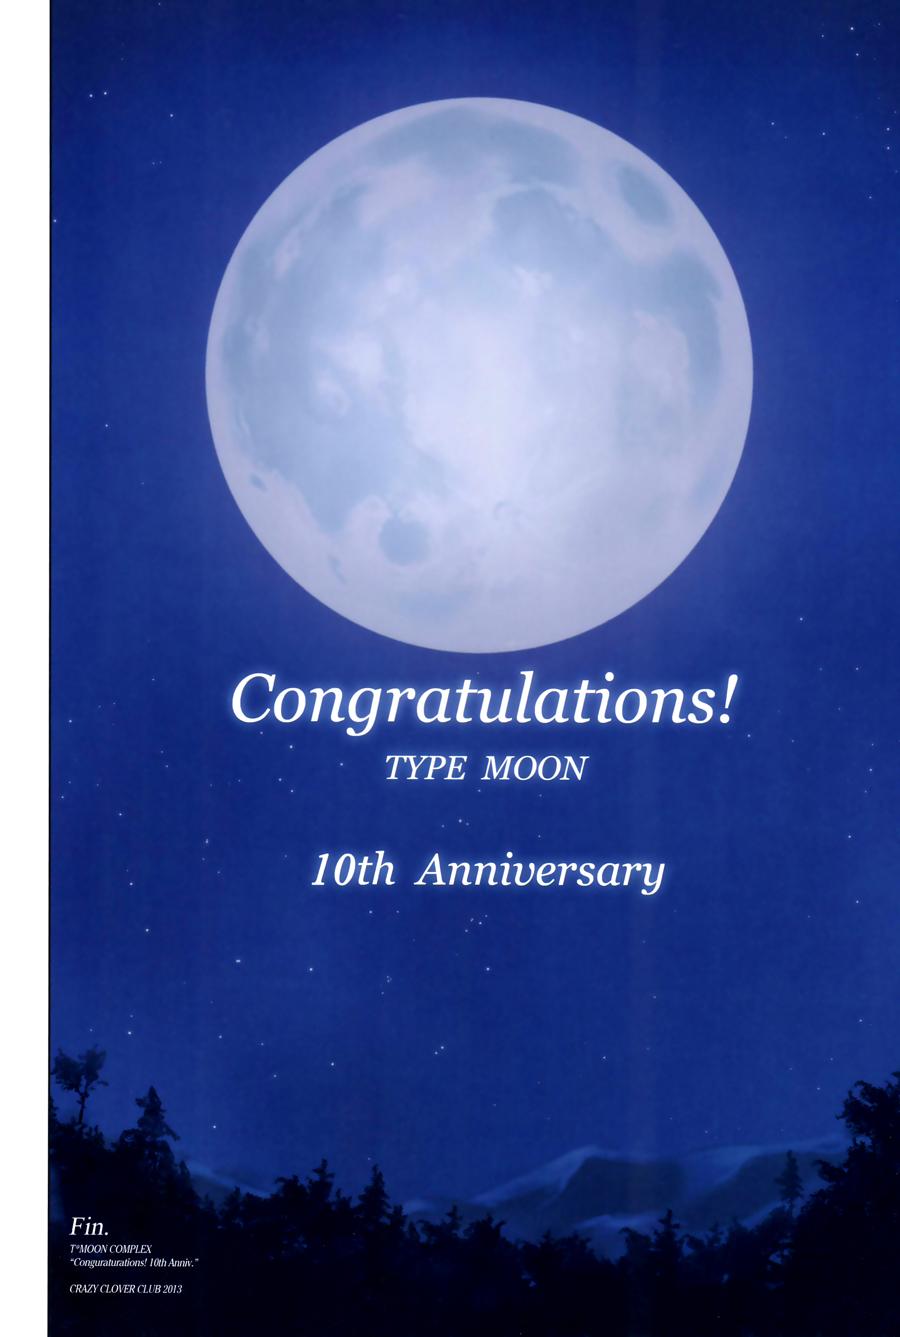 T-MOON COMPLEX Congratulations! 10th Anniversary 26